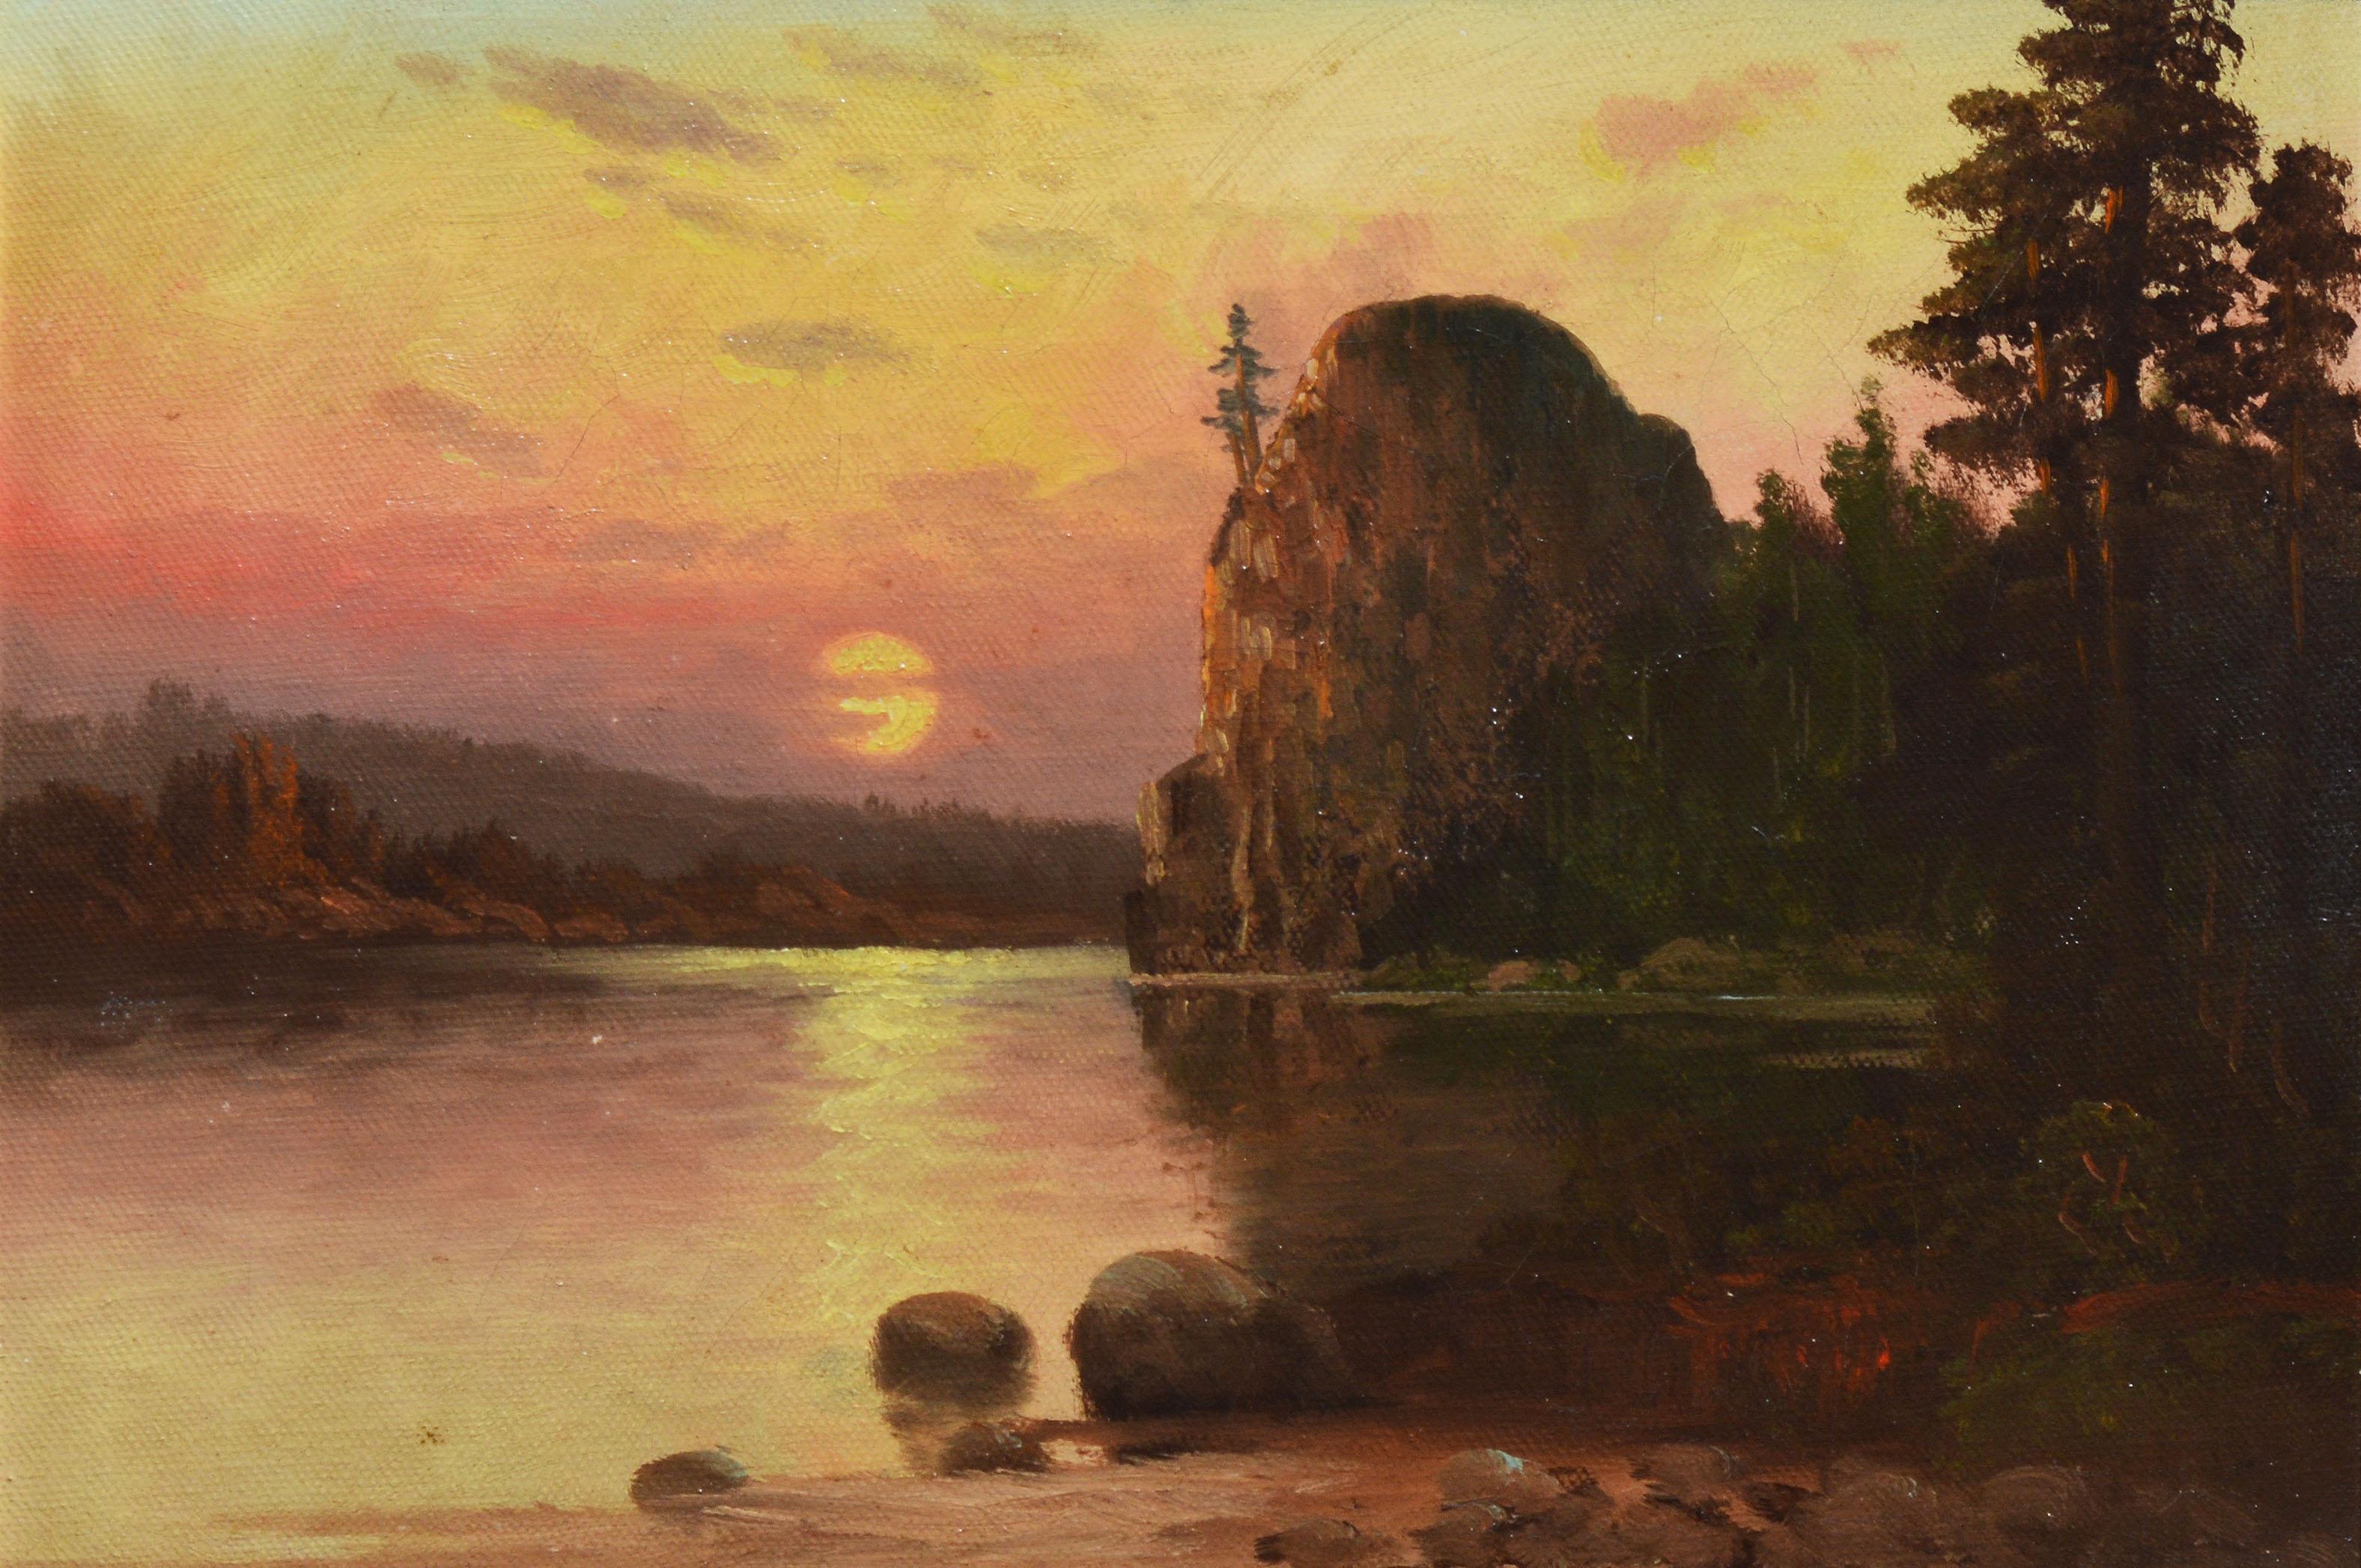 Western American Sunset California River Landscape Oil Painting, John Englehart 1